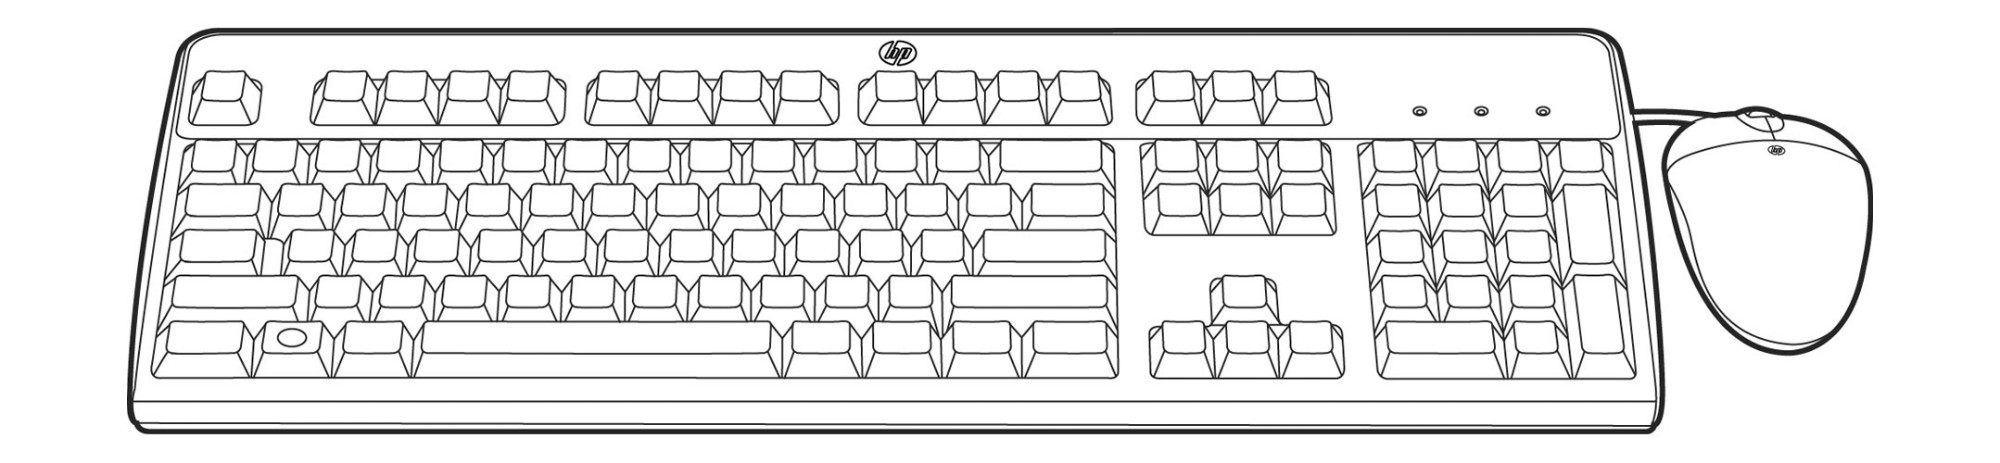 Hewlett Packard Enterprise 631358-B21 keyboard Mouse included USB QWERTZ German Black